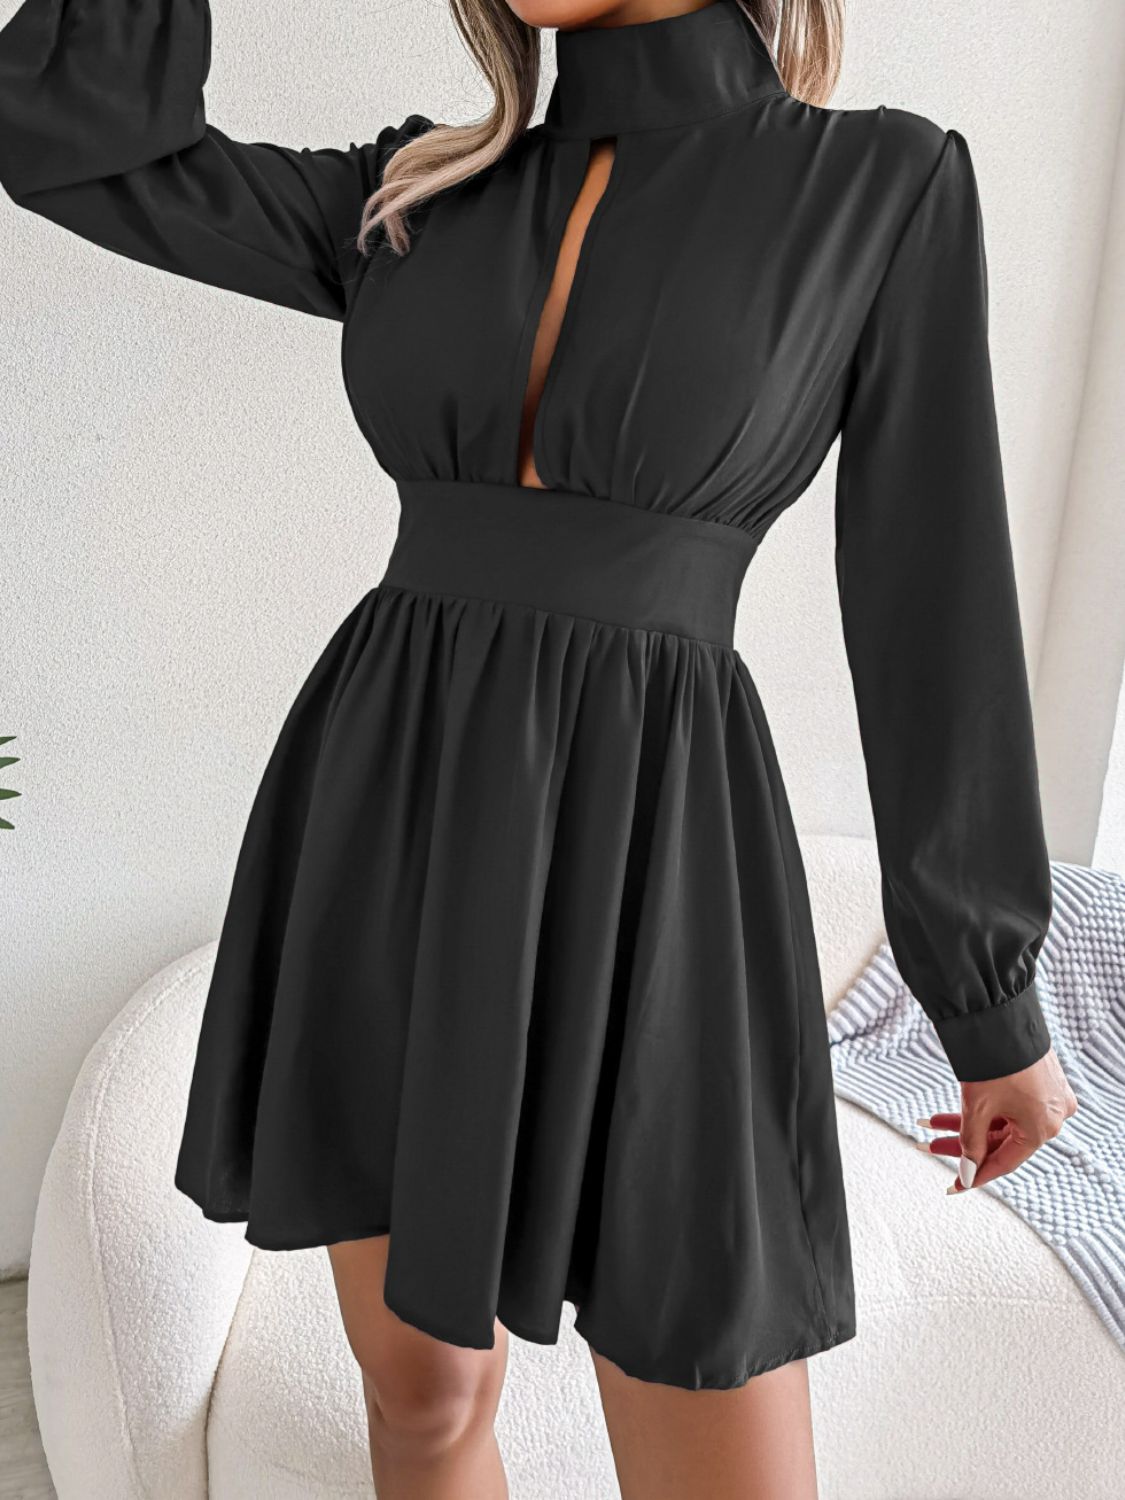 Chic Cutout Turtleneck Mini Dress - A-Line, Long Sleeve, Keyhole Neckline - Casual Elegance for Women